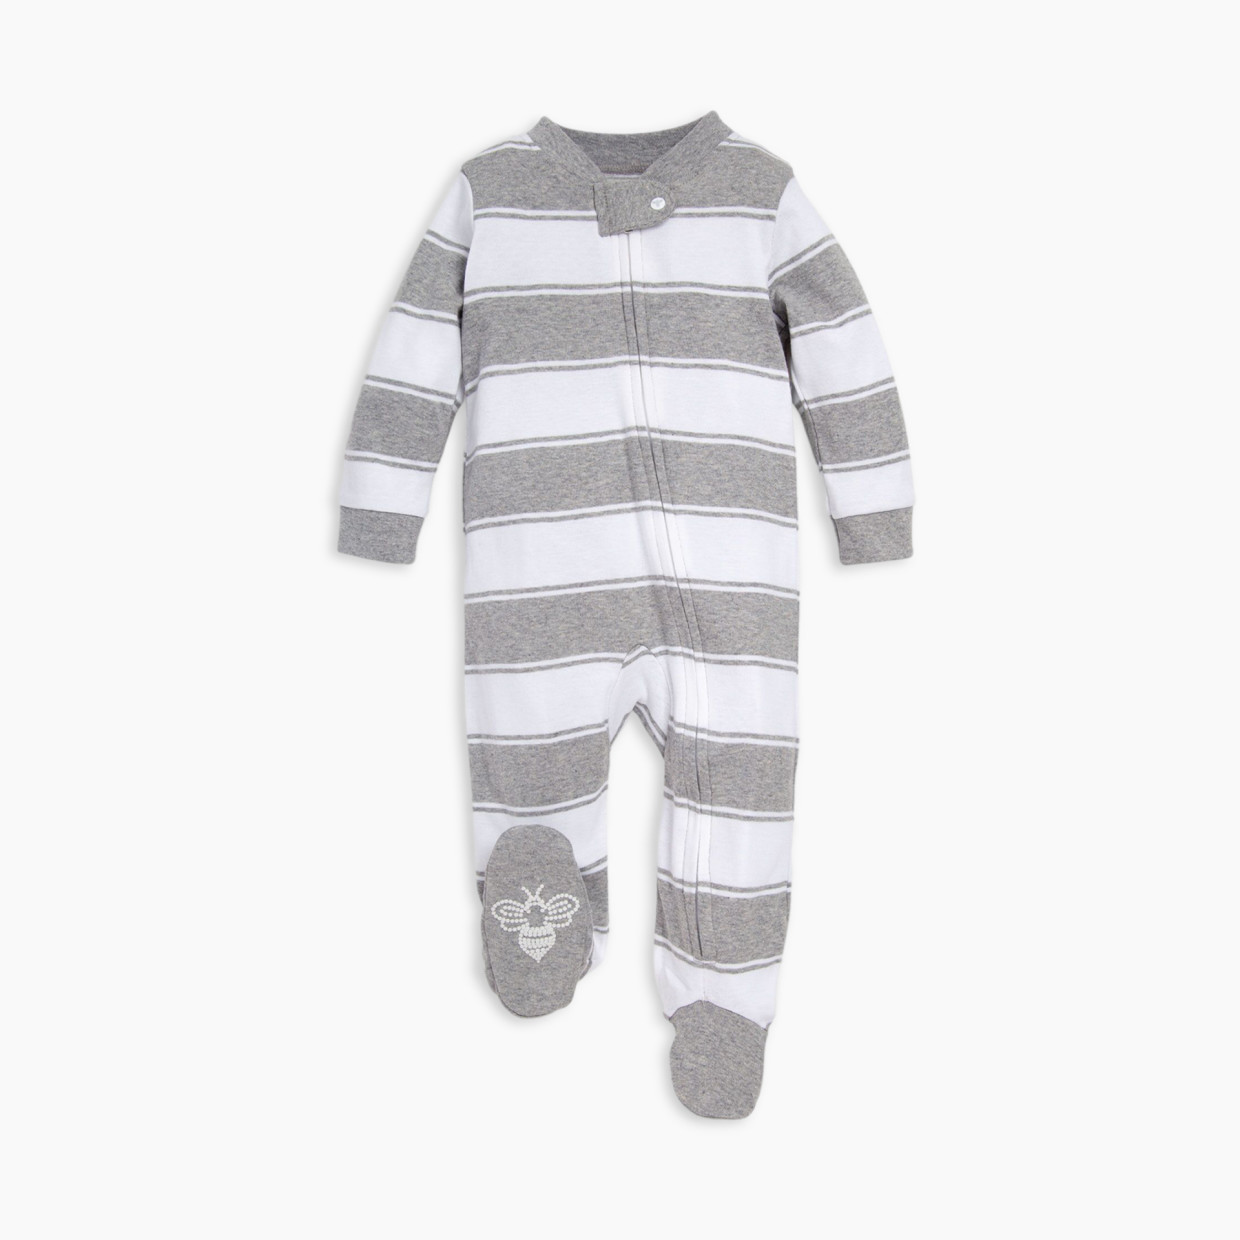 Burt's Bees Baby Organic Sleep & Play Footie Pajamas - Heather Grey Rugby Peace Stripe, 3-6 Months.